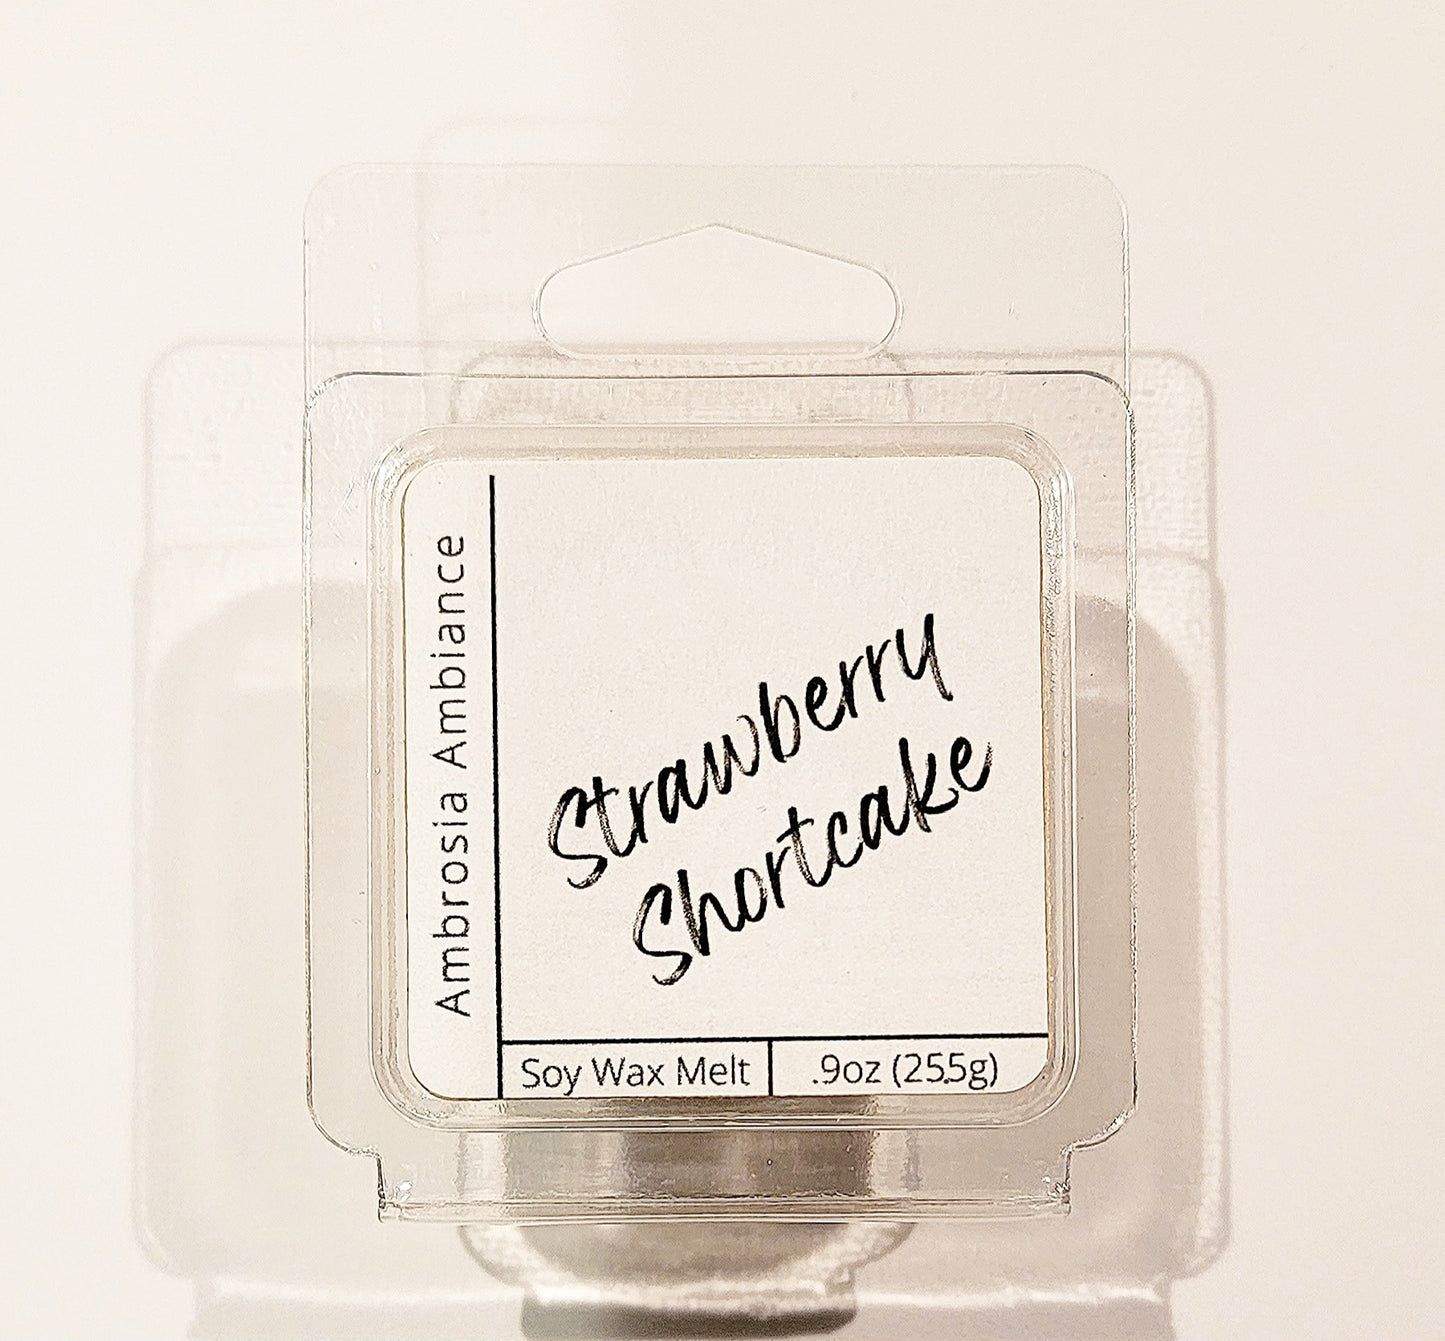 Strawberry Shortcake | Soy Wax Melt